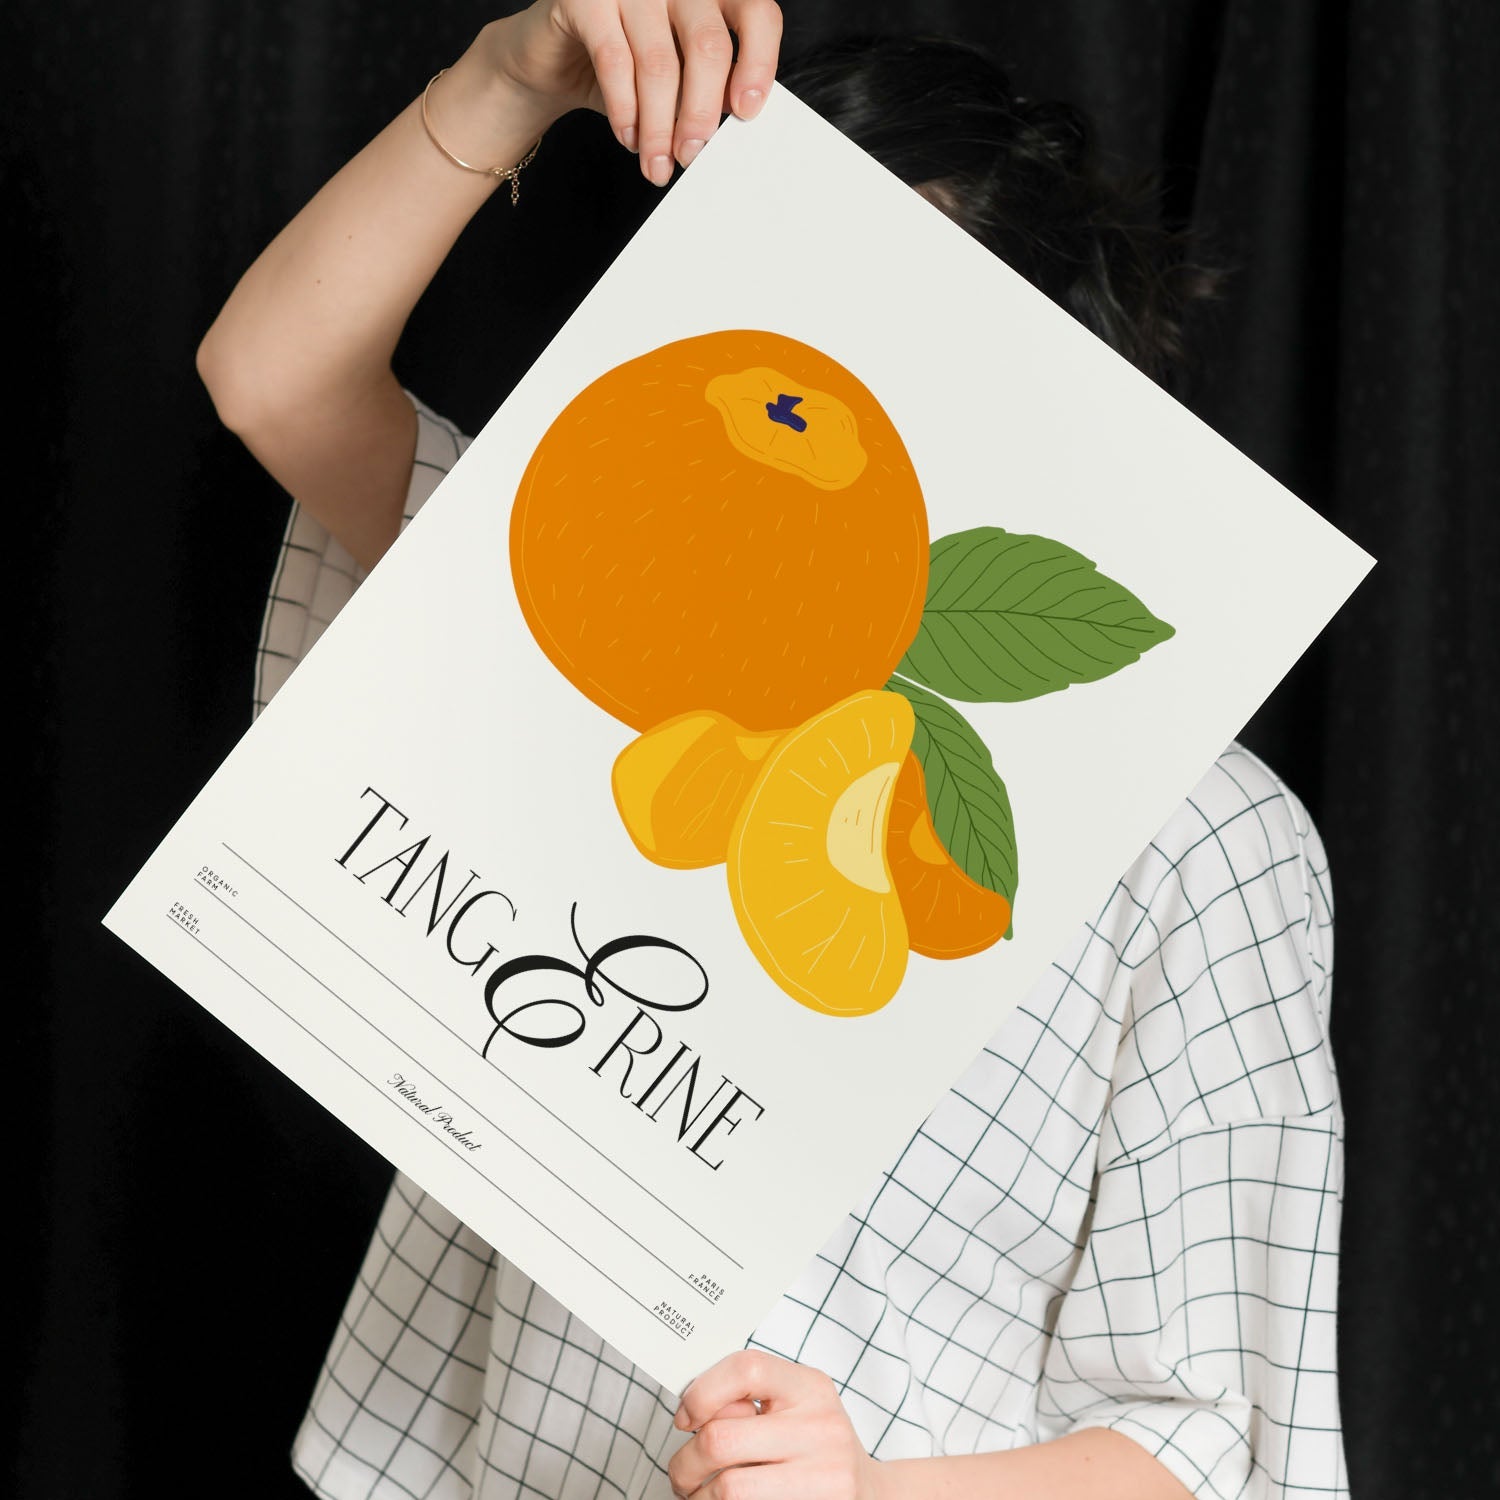 Tangerine-Artwork-Nacnic-Nacnic Estudio SL